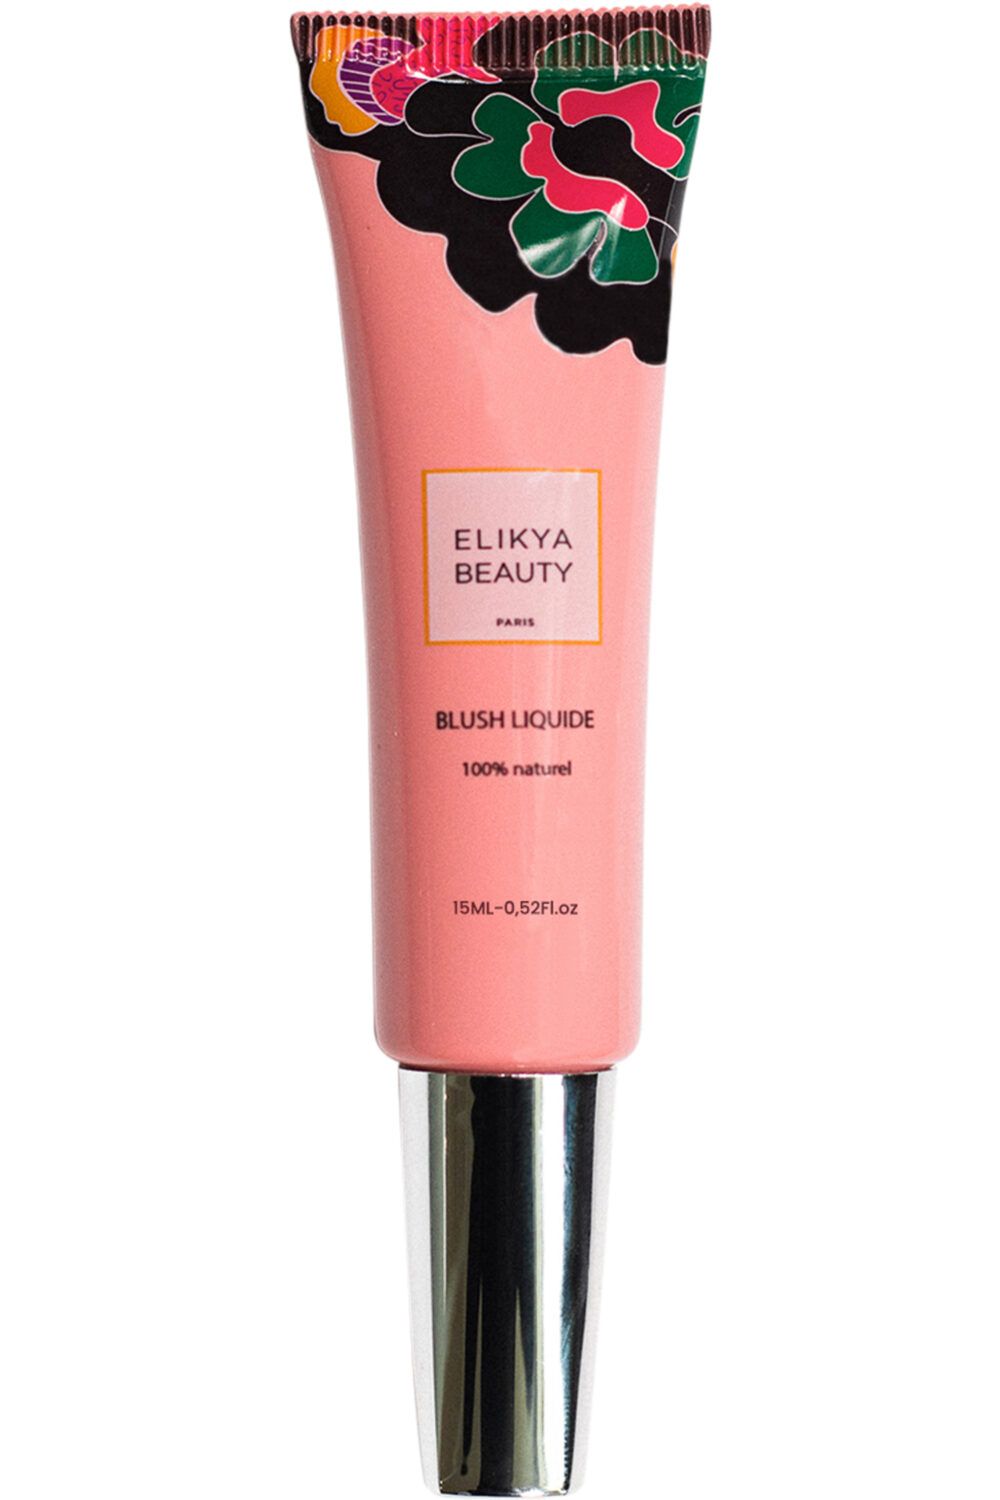 Elikya Beauty - Blush liquide Framboise